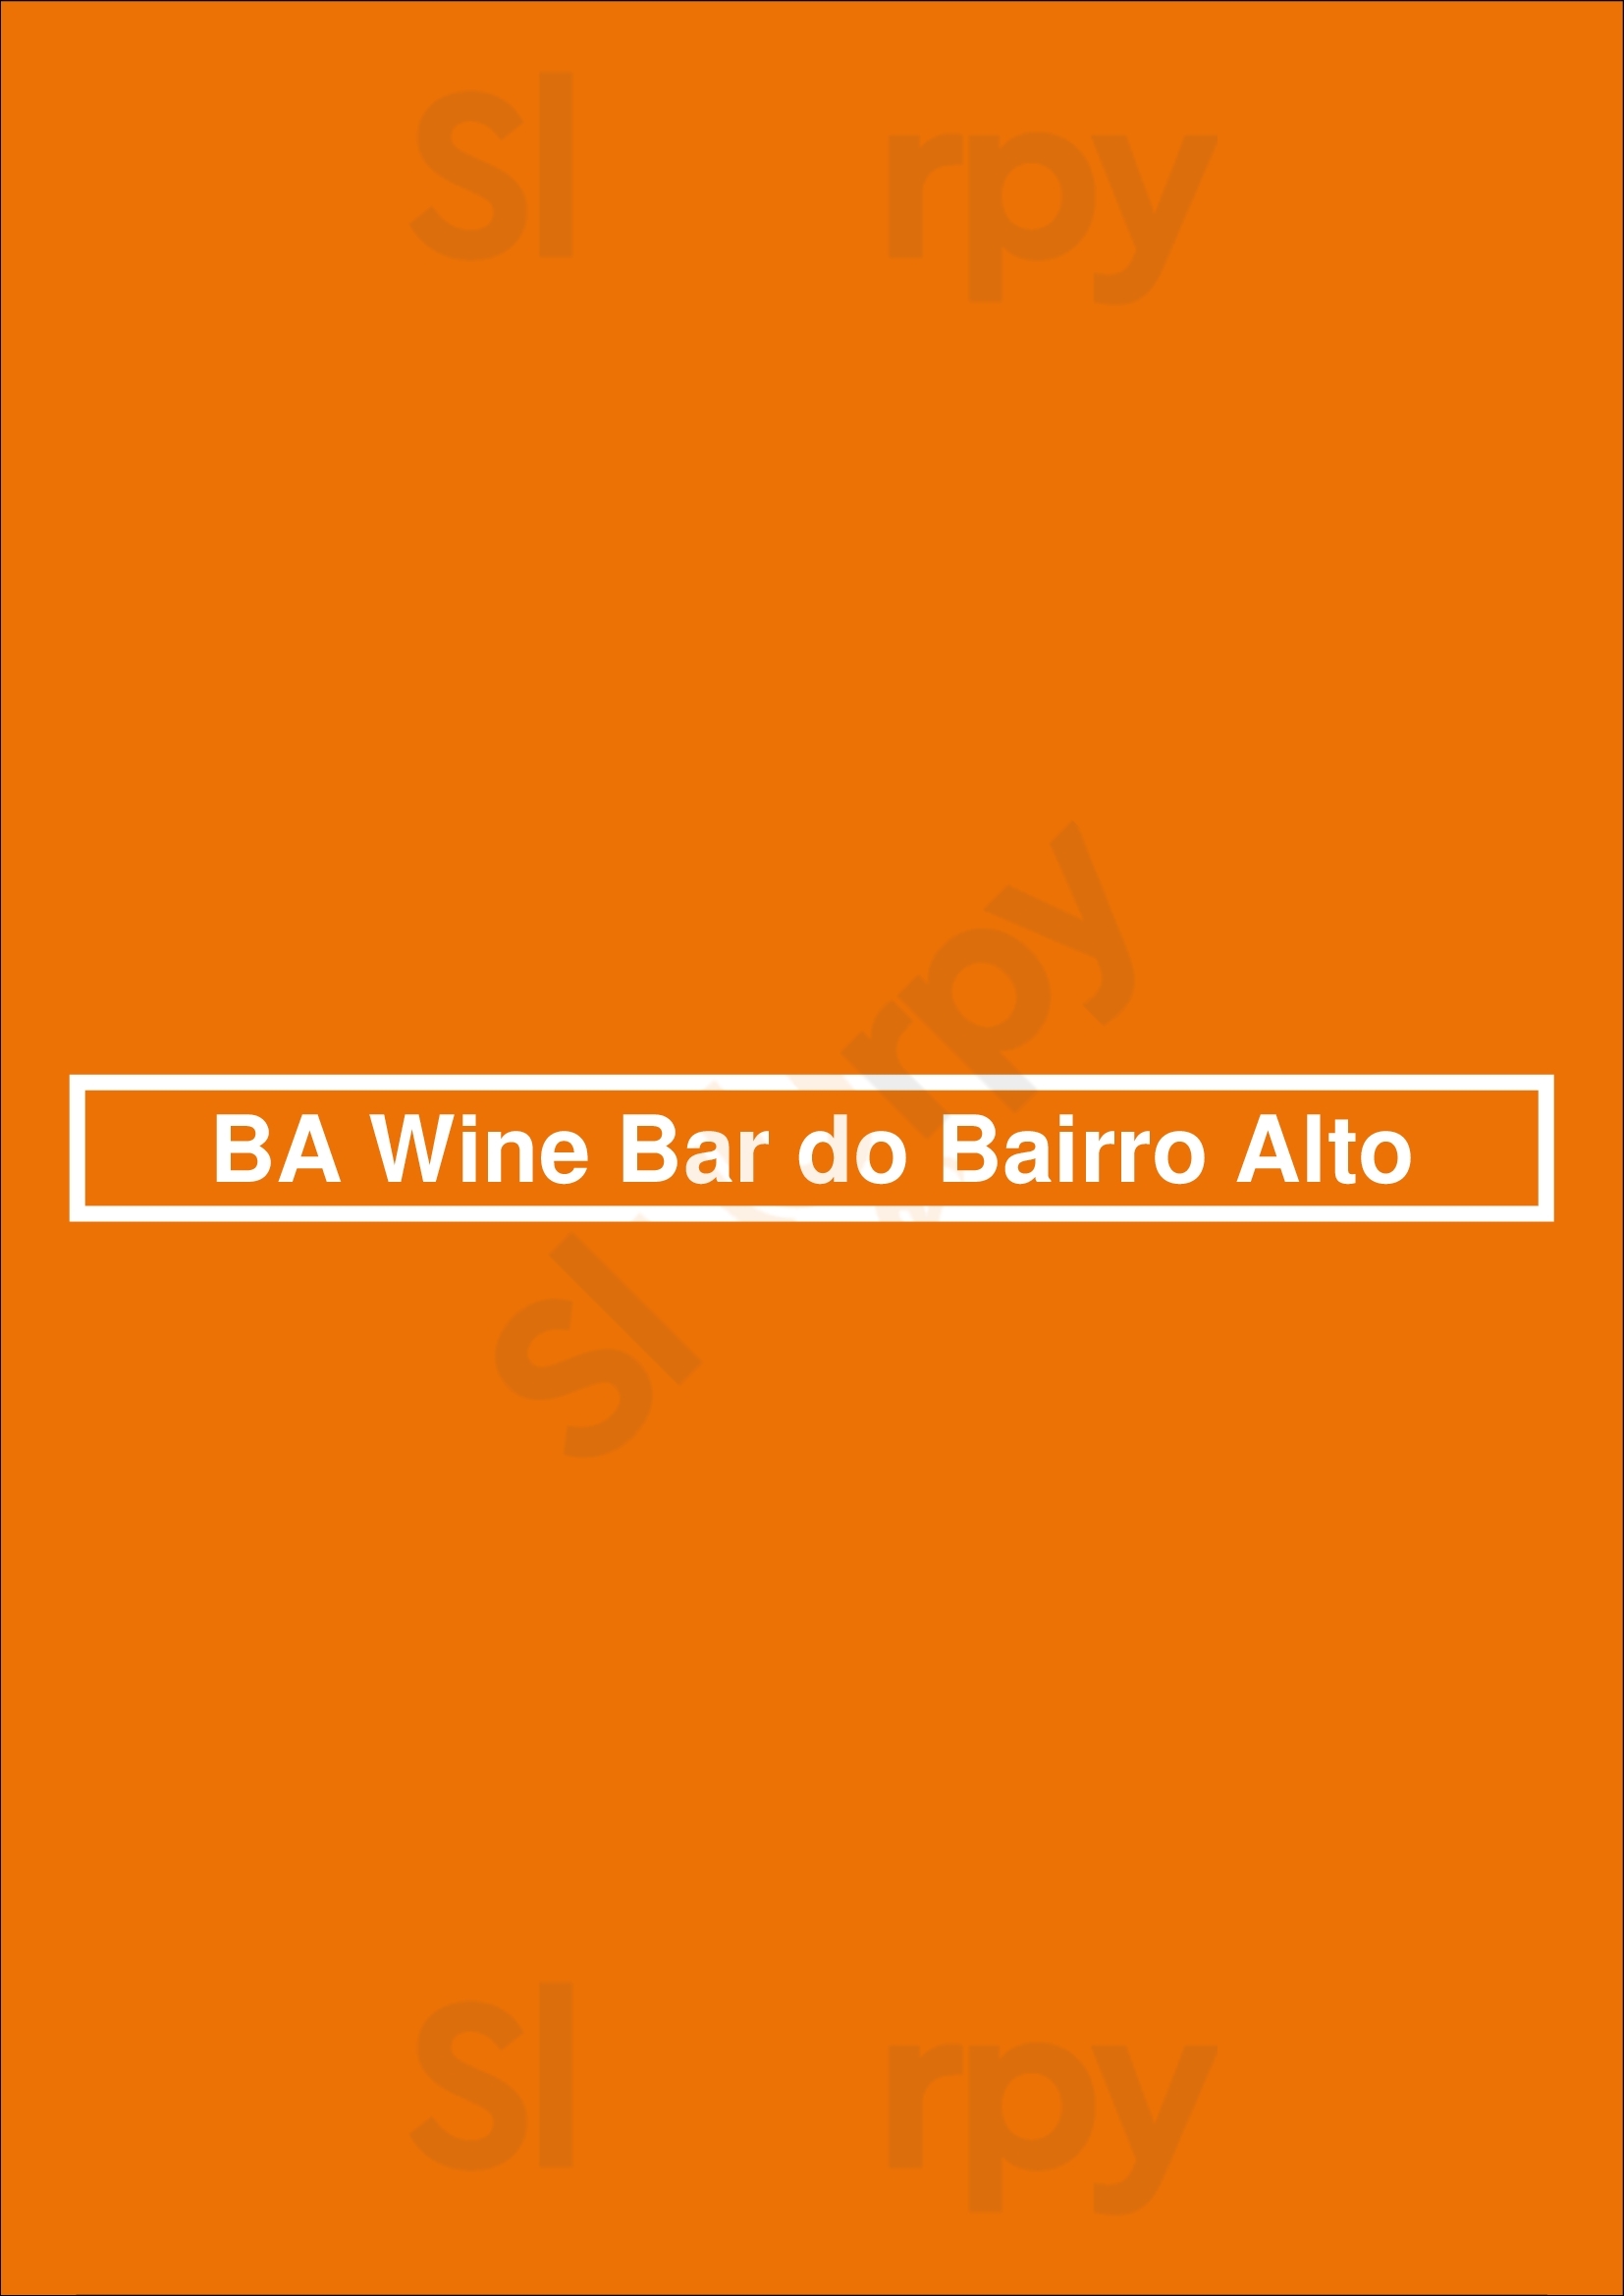 Ba Wine Bar Do Bairro Alto Lisboa Menu - 1